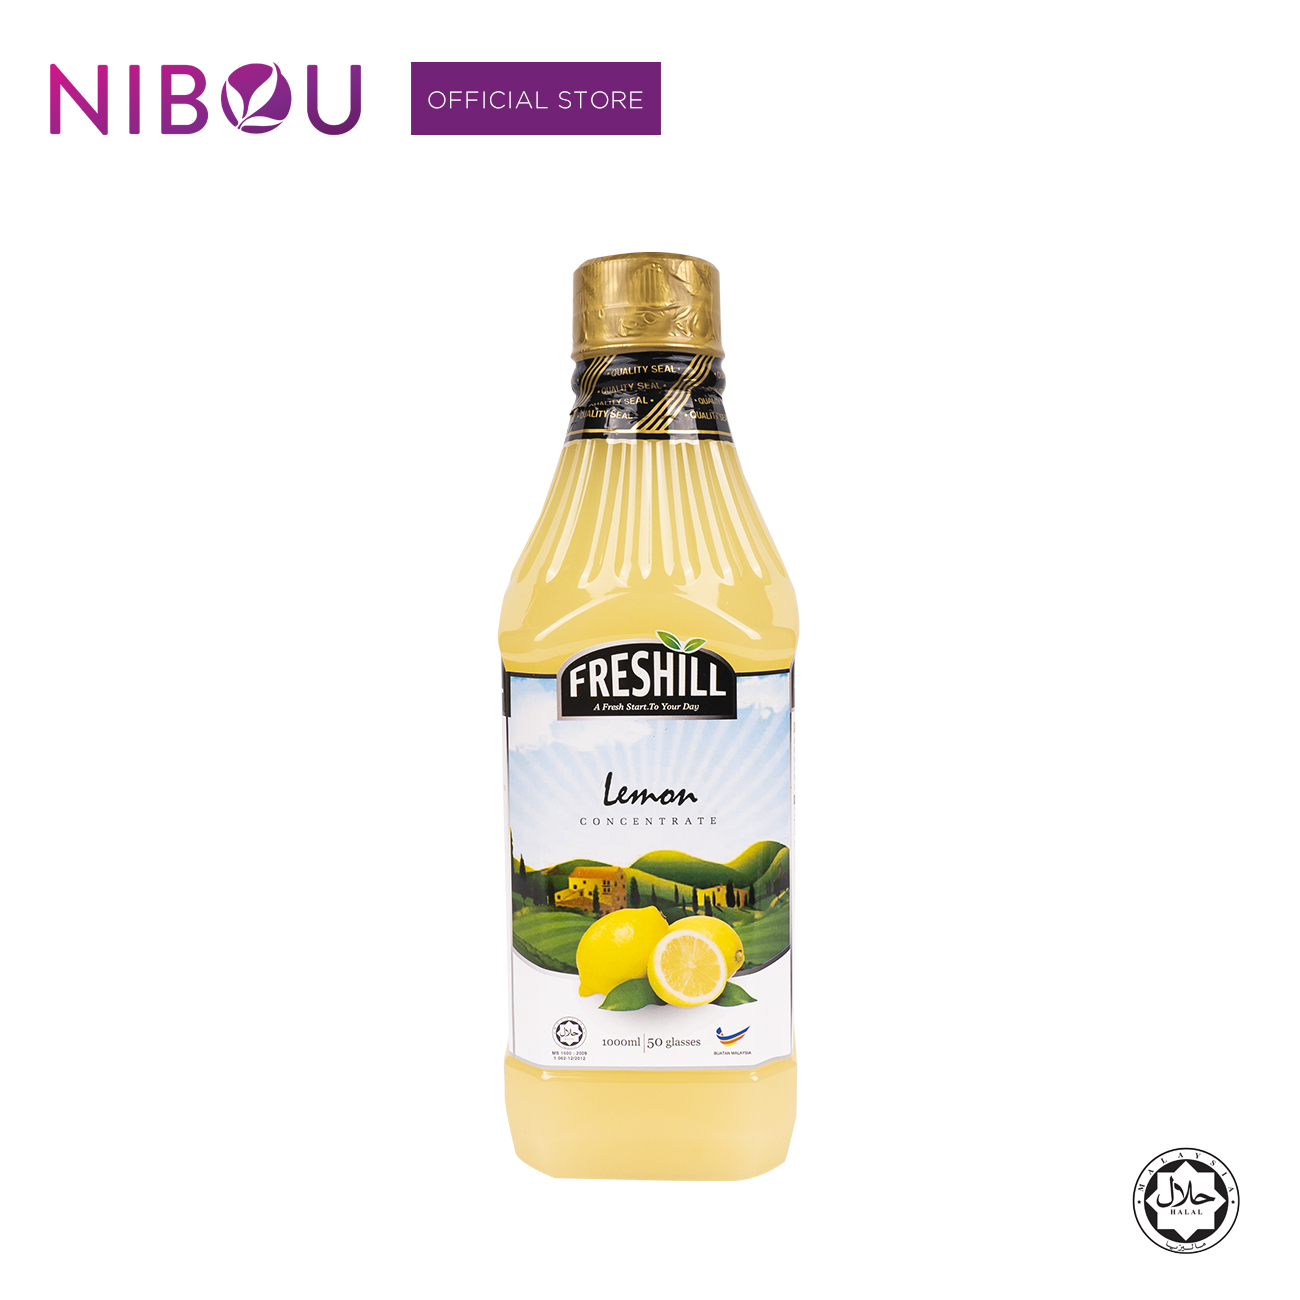 Nibou (NBI) FRESHILL Lemon Concentrate (1l x 12btl)